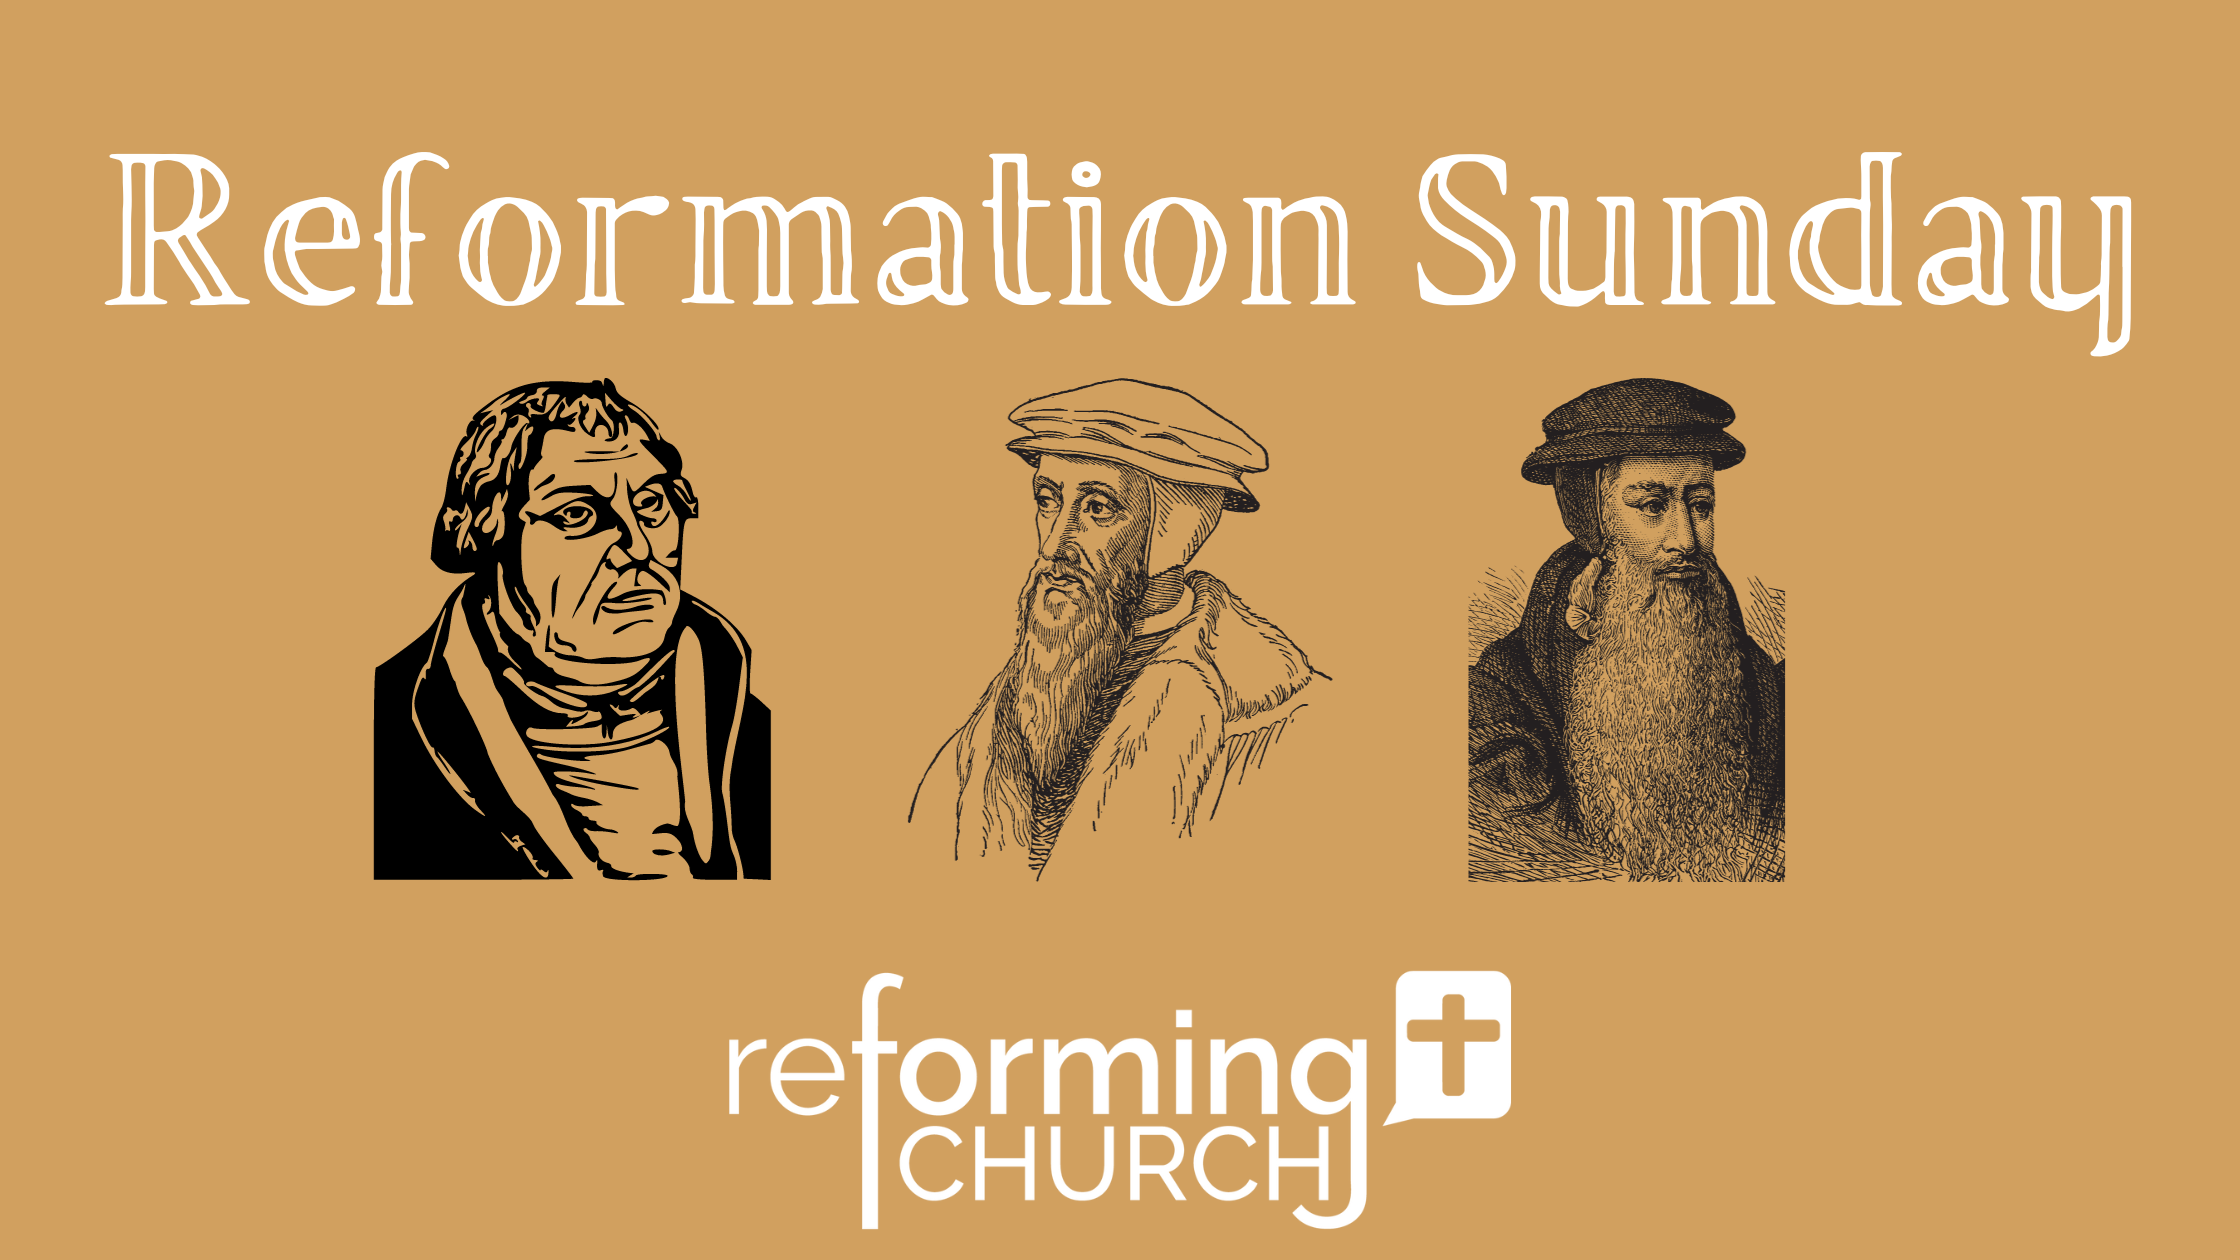 Reforming Church